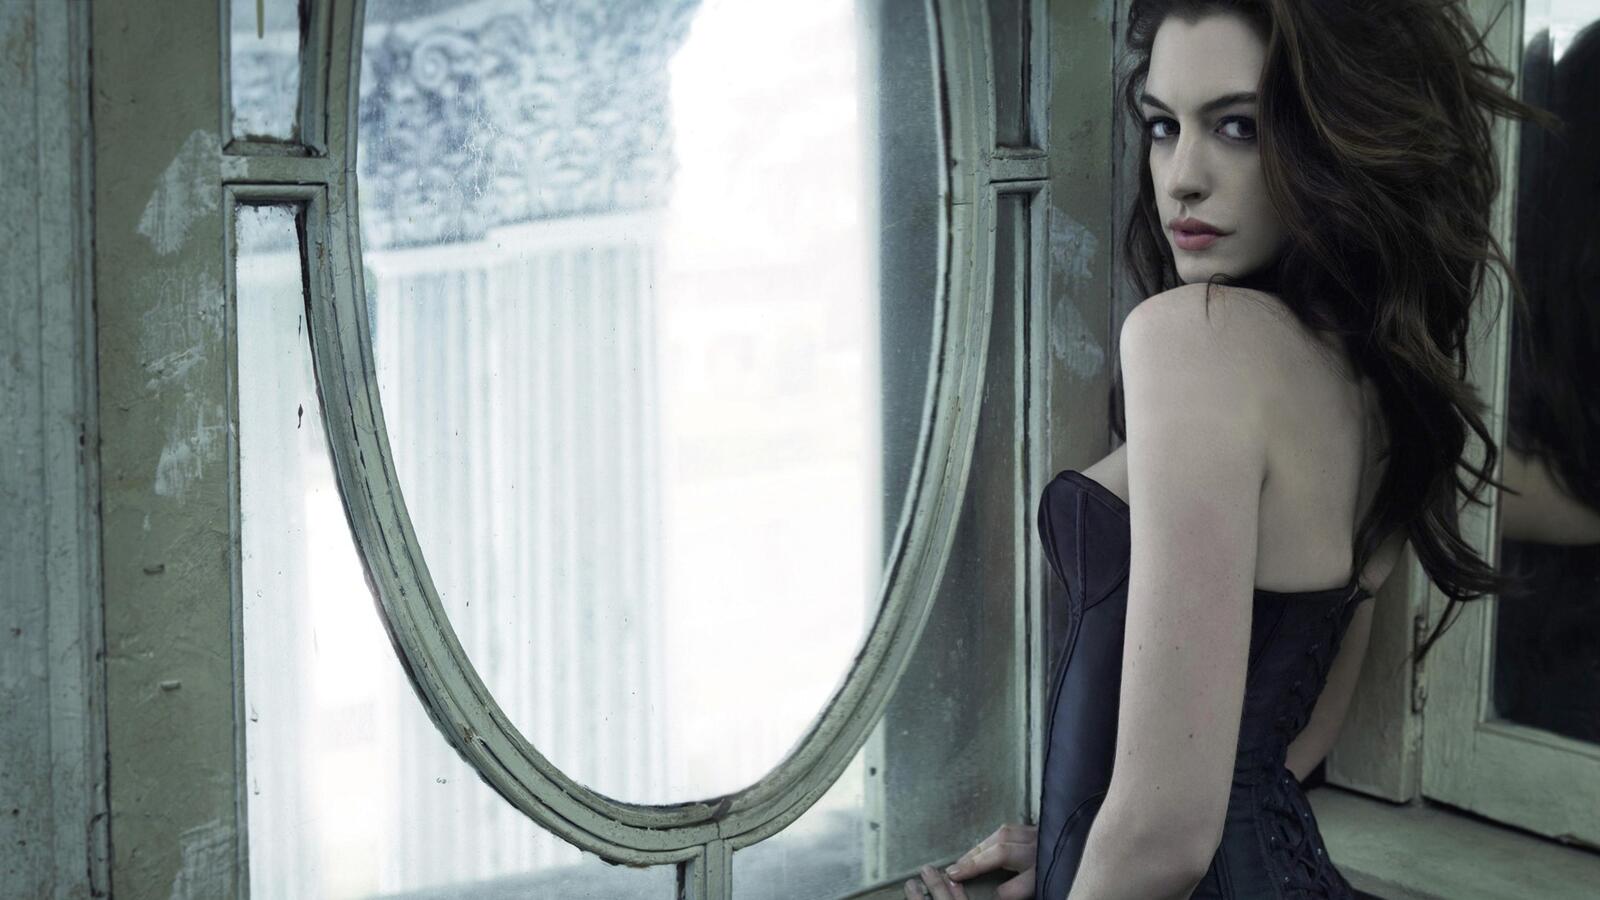 Wallpapers mirror Anne Hathaway celebrities on the desktop